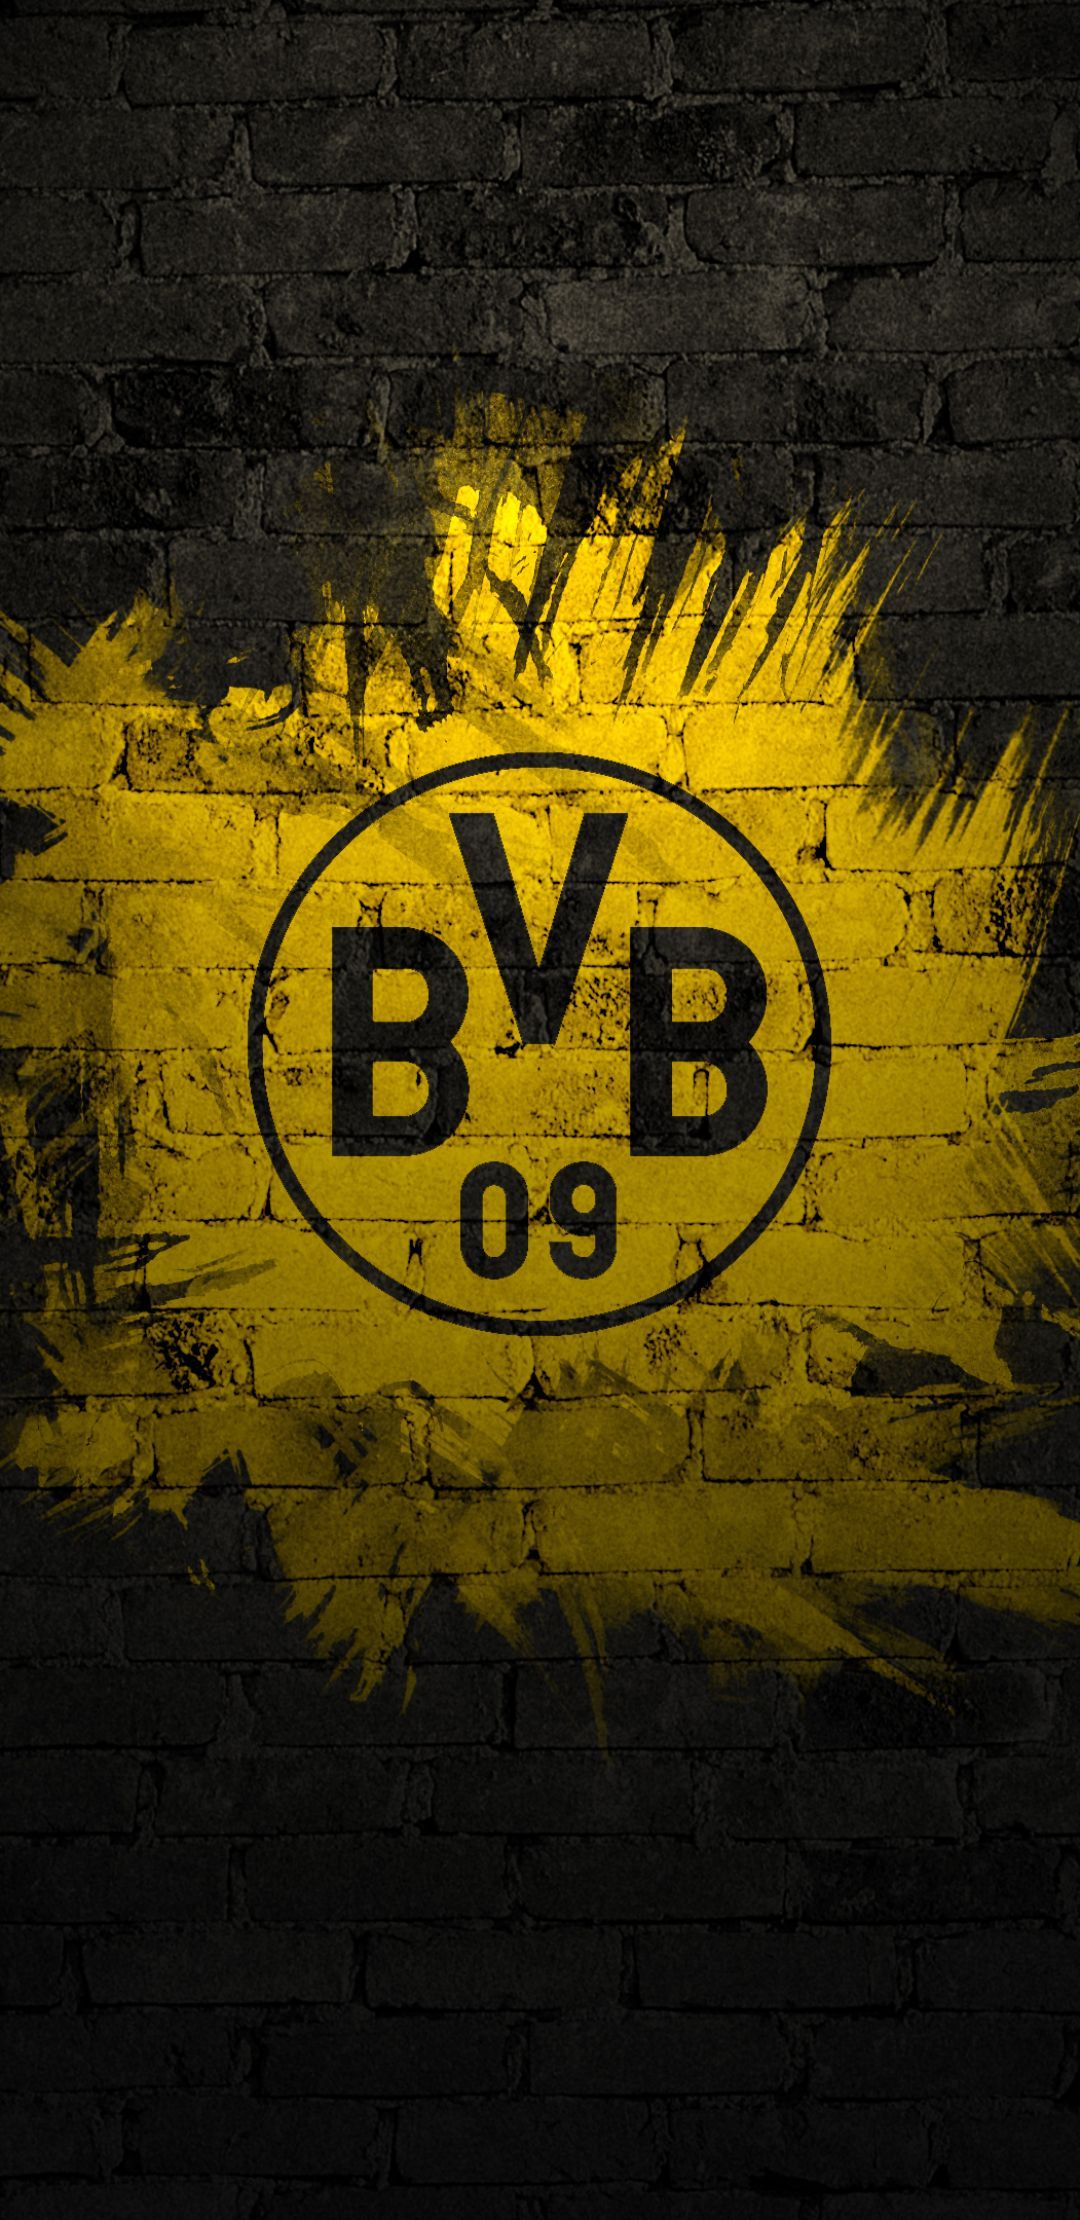 BVB Dortmund Wallpaper Free BVB Dortmund Background